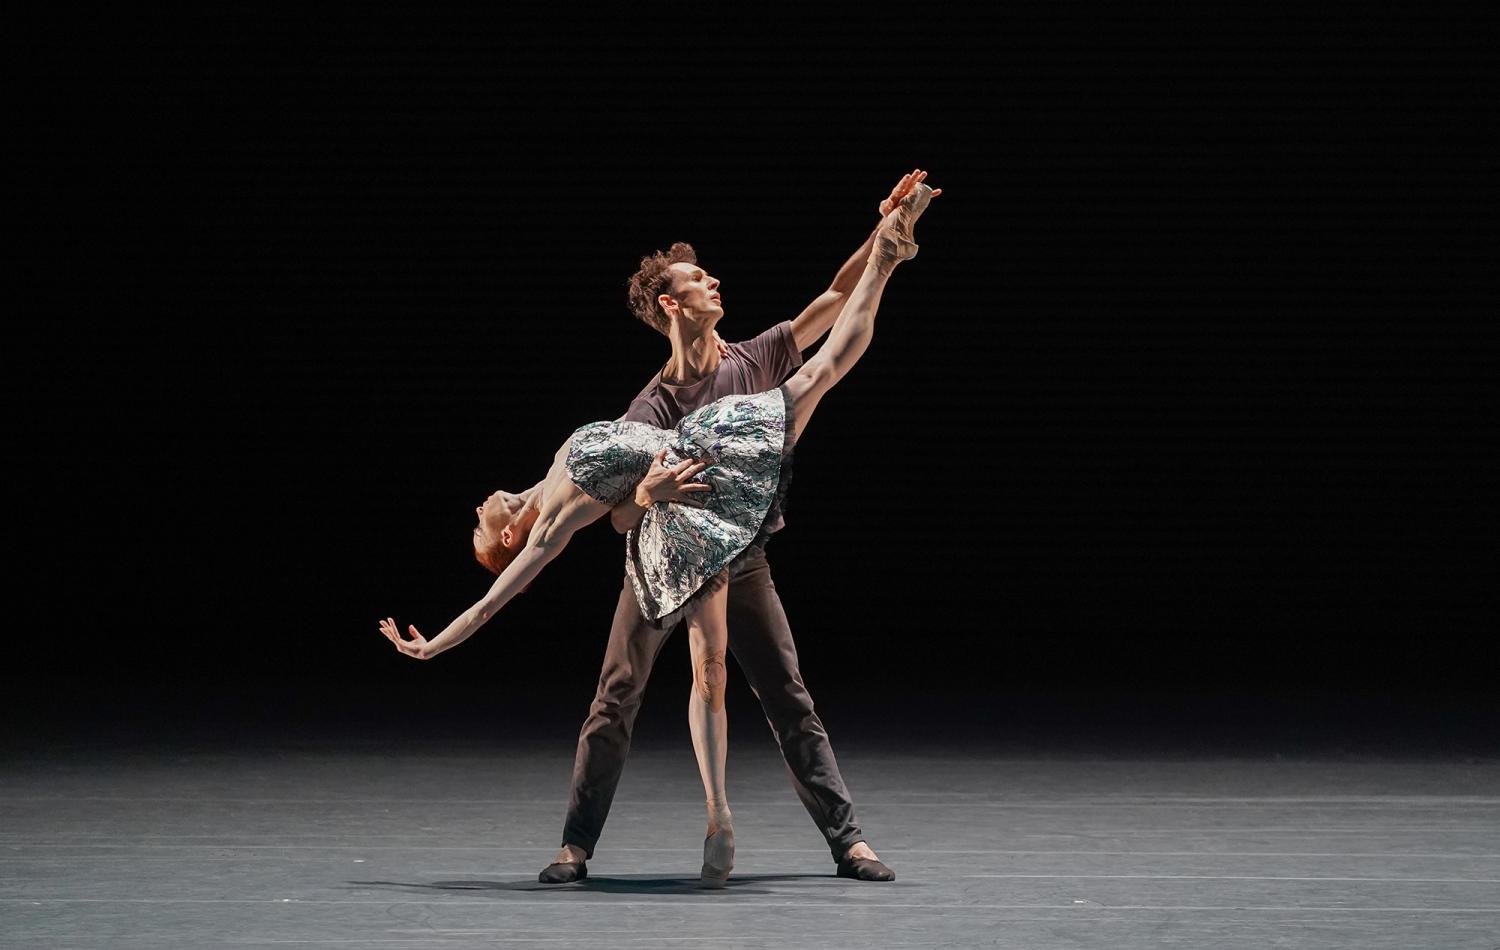 6. E.Krysanova and S.Chudin, “Dancemania” by V.Samodurov, Bolshoi Ballet © P.Rychkov / Bolshoi Theatre